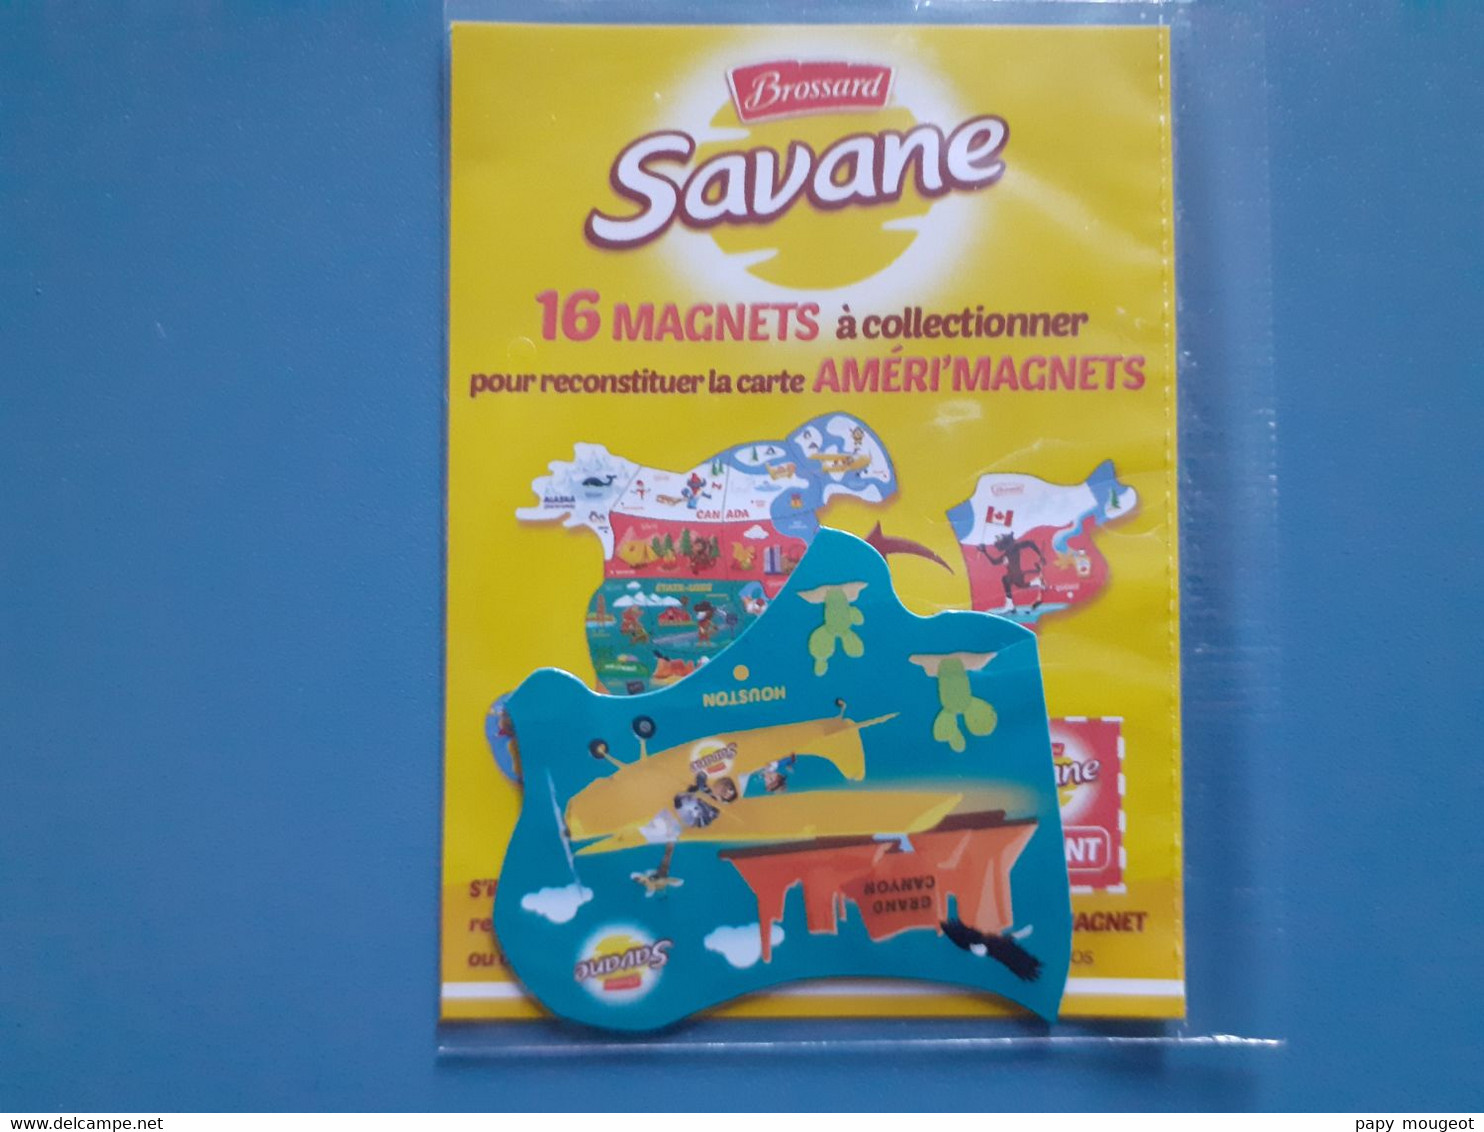 Brossard Savane - 16 Magnets Carte AMERI'MAGNETS - USA - Grand Canyon Houston - Pubblicitari